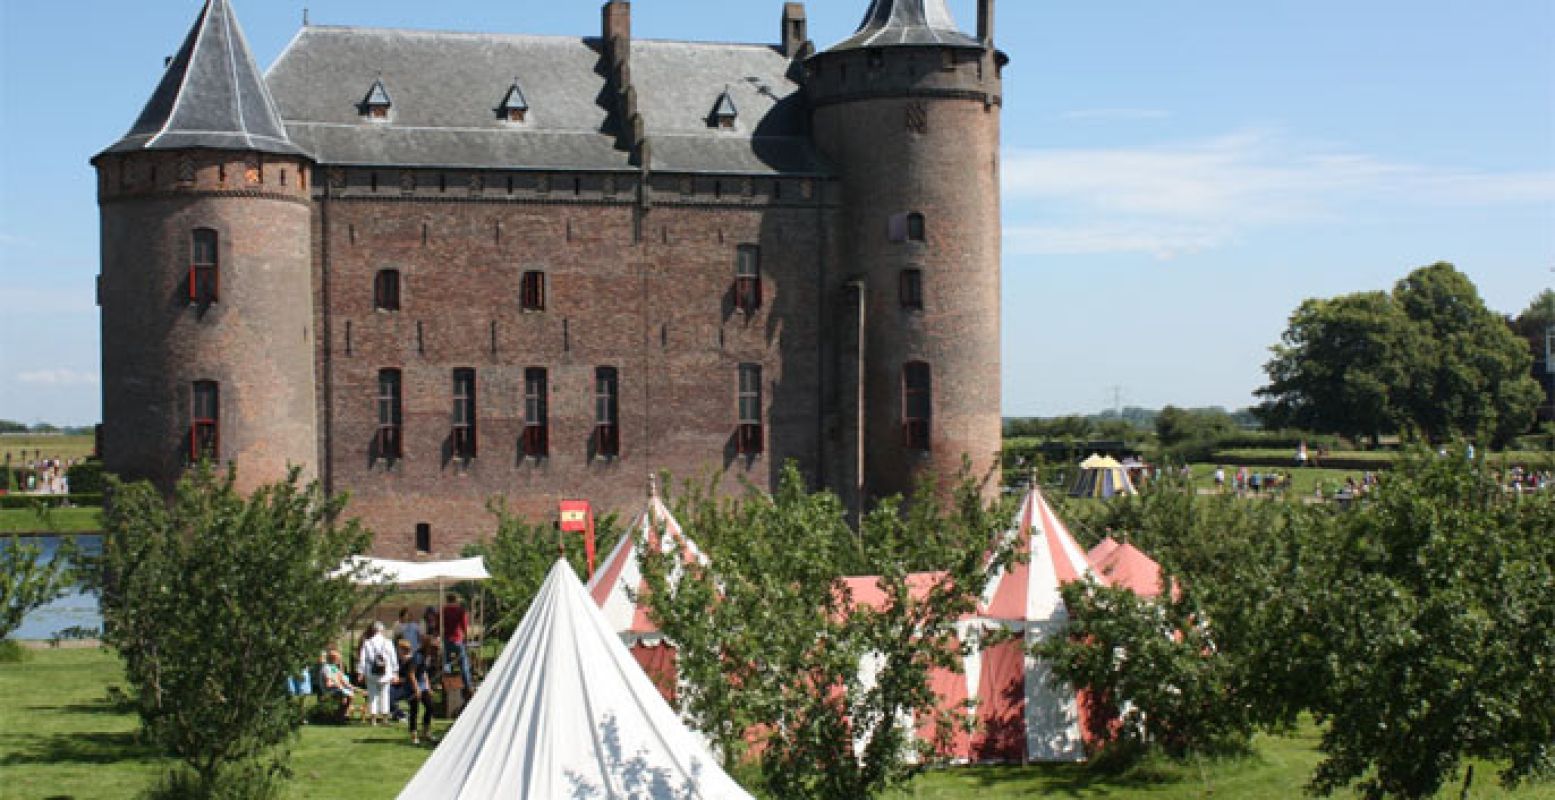 Middeleeuws kampement dit Pinksterweekend op het Muiderslot. Foto: Muiderslot